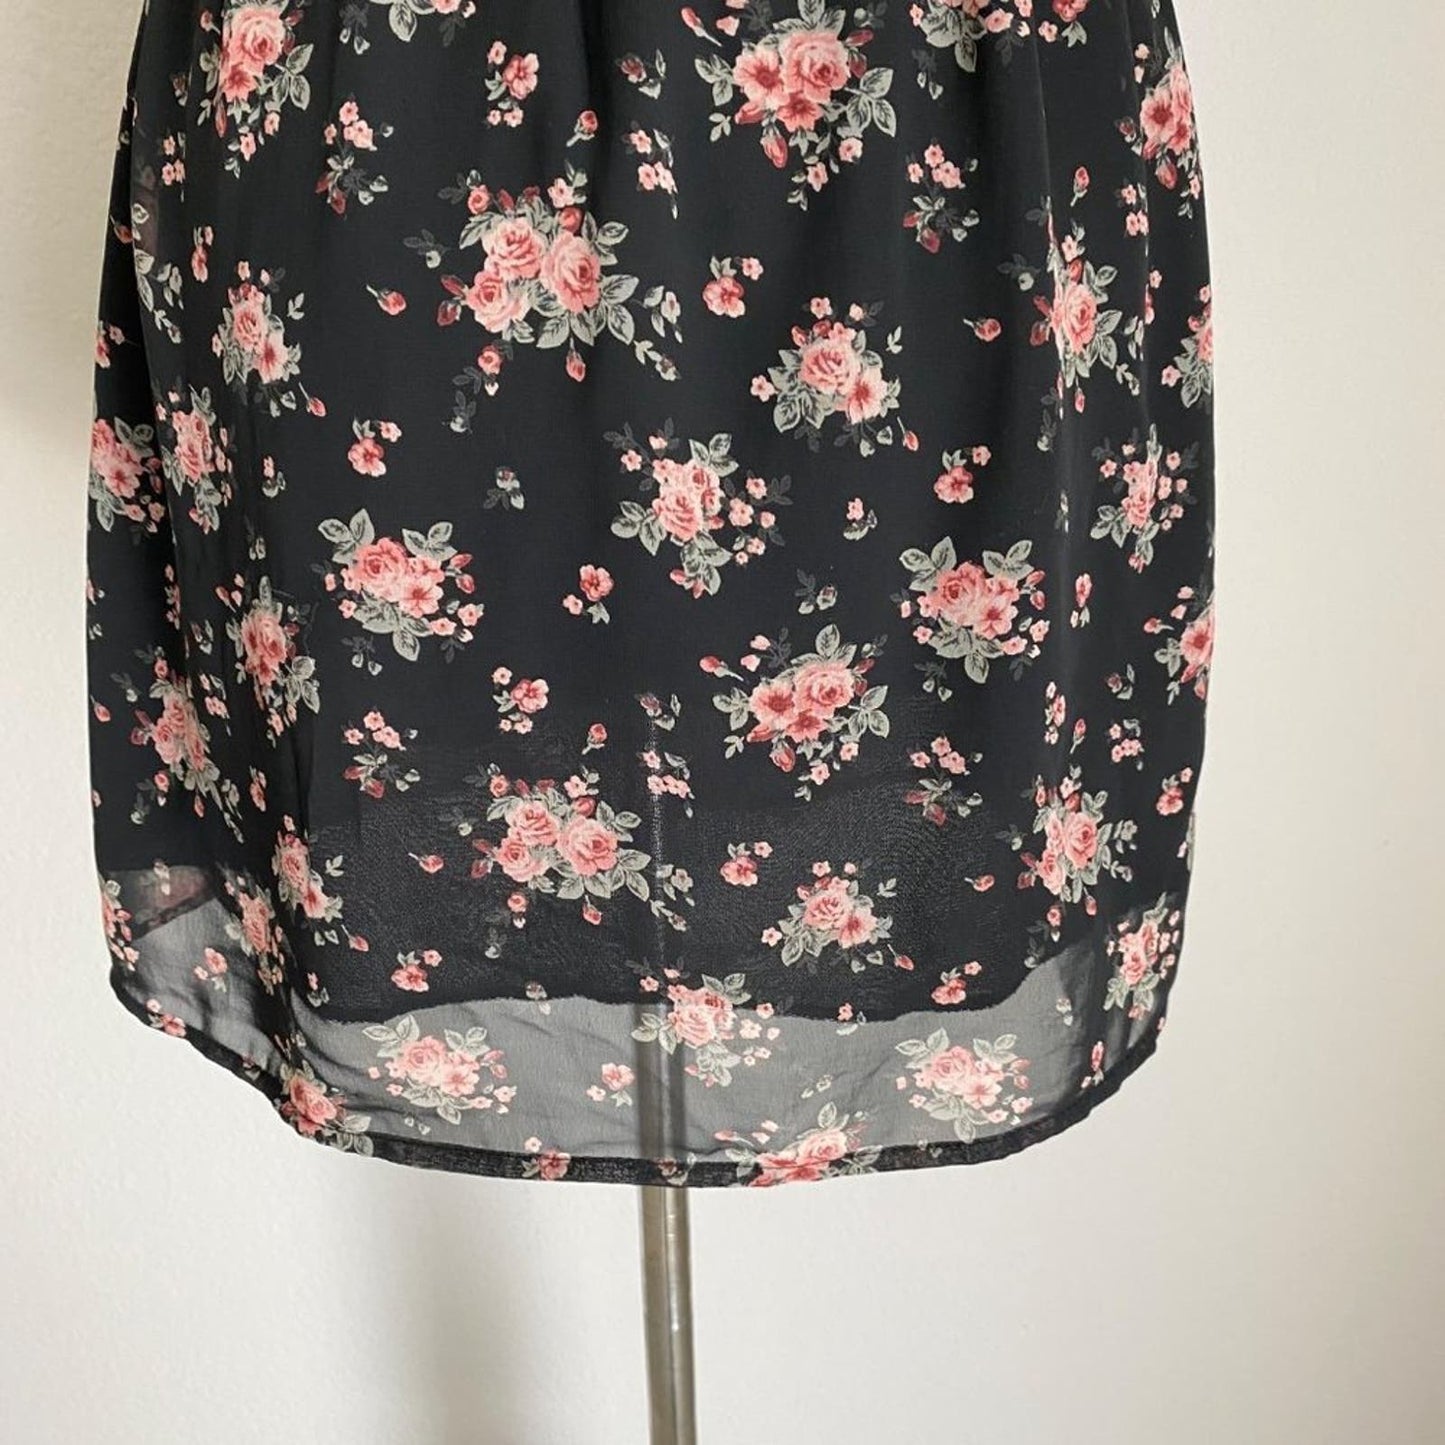 Foreign Exchange sz S black Y2K floral mini summer dress